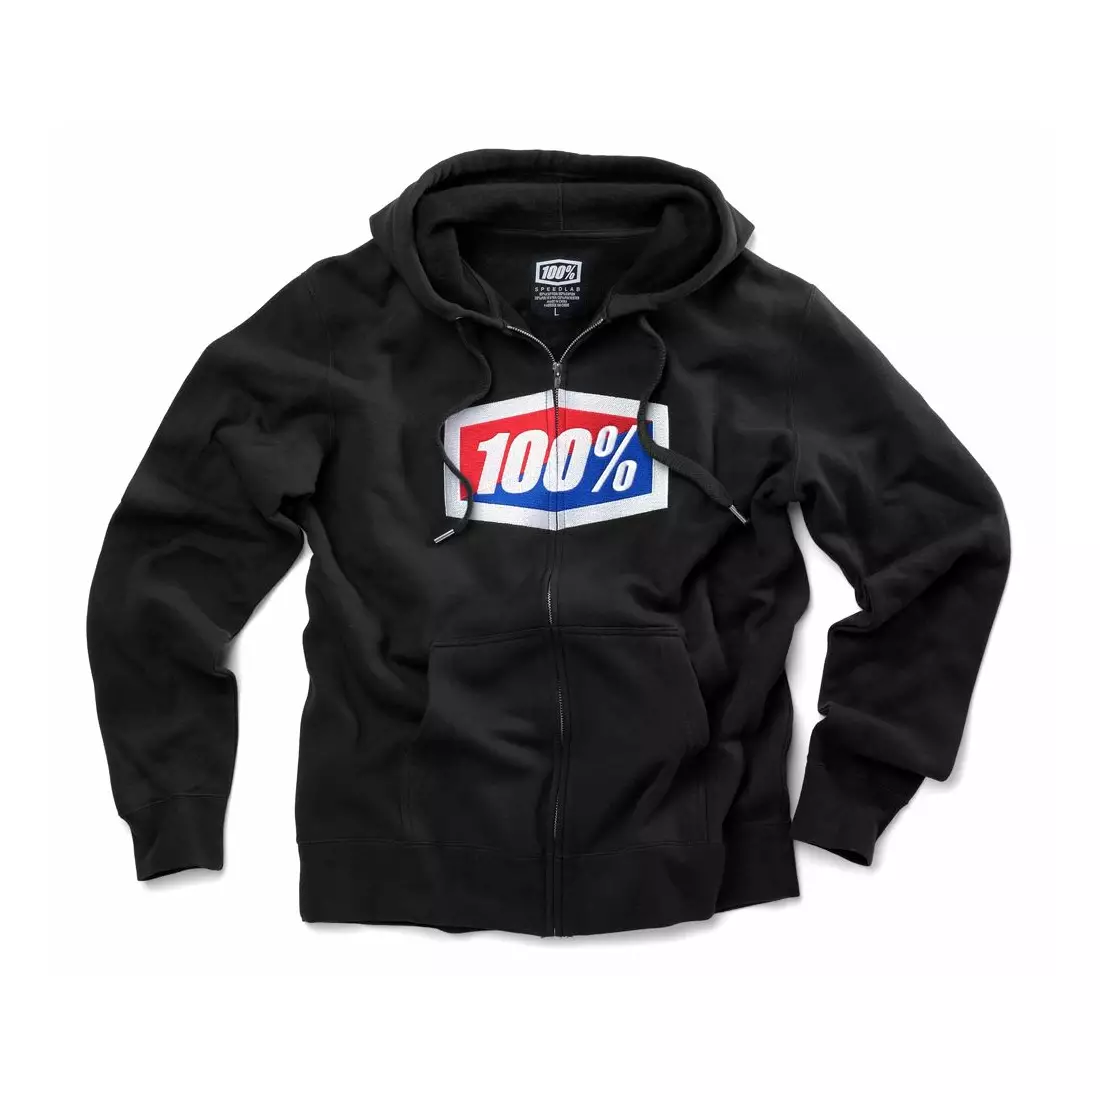 100% bluza sportowa męska official hooded zip black STO-36005-001-10